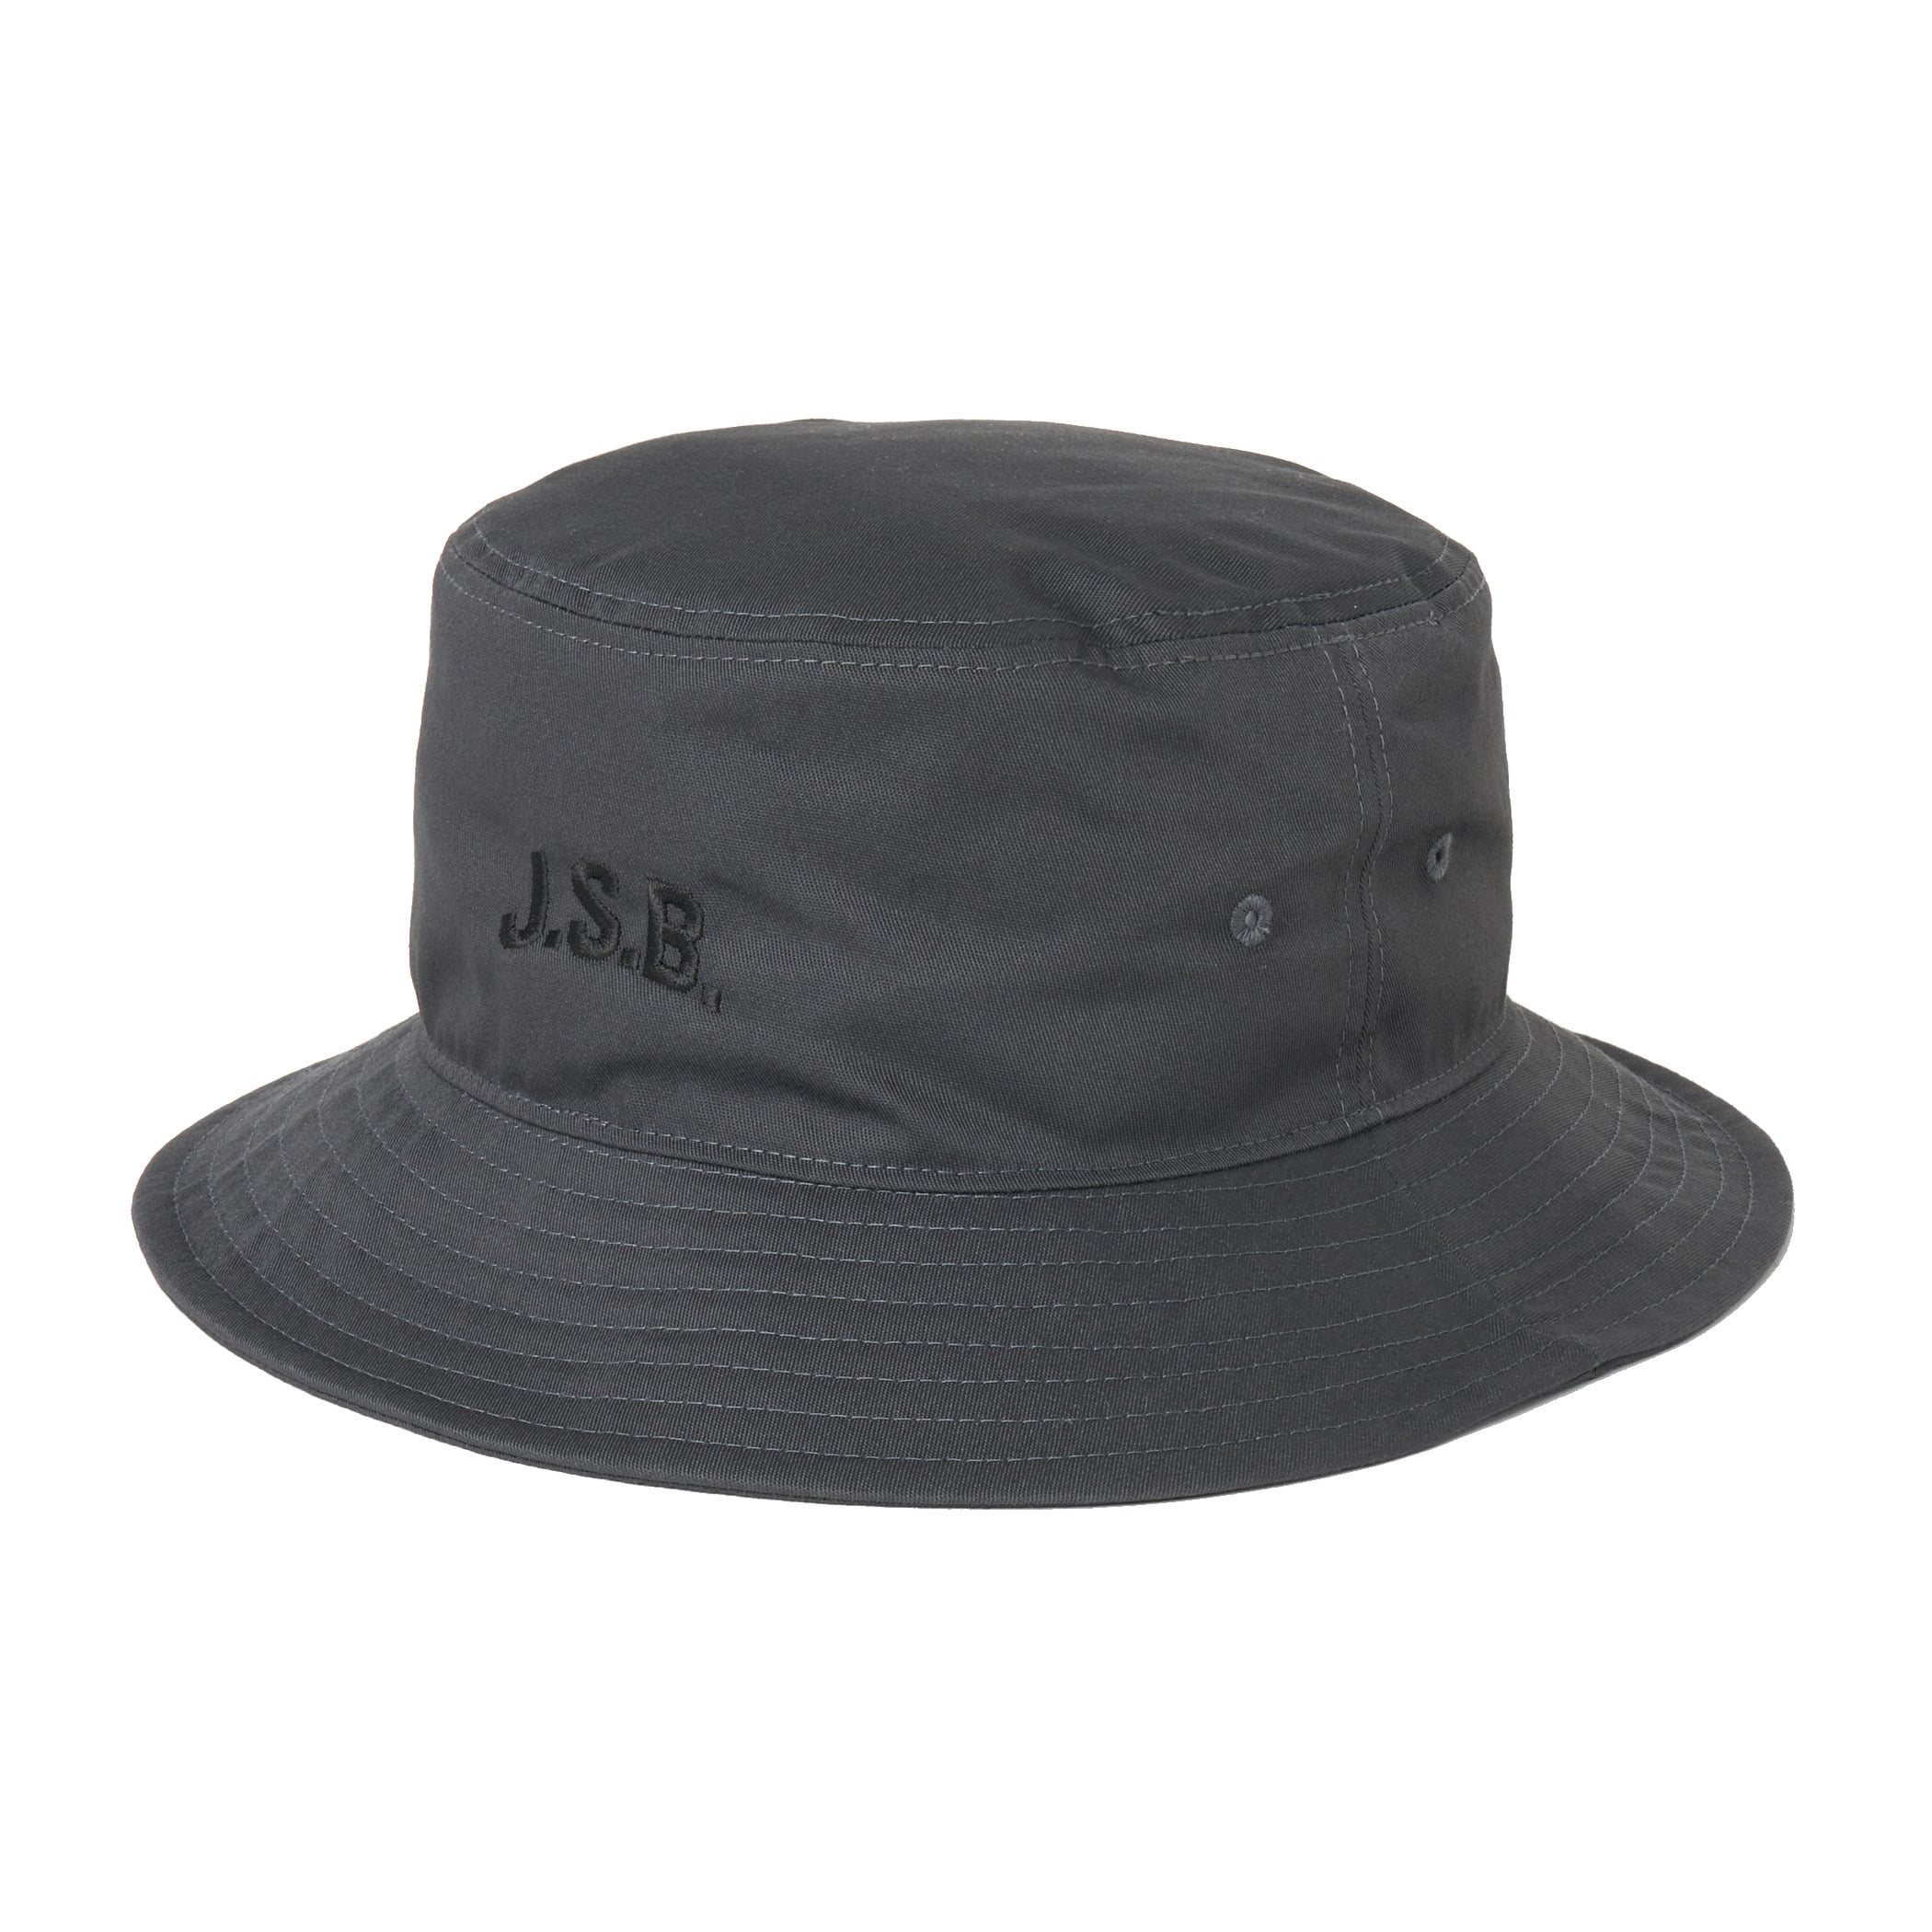 JSB College Bucket Hat BK | J.S.B. | VERTICAL GARAGE OFFICIAL